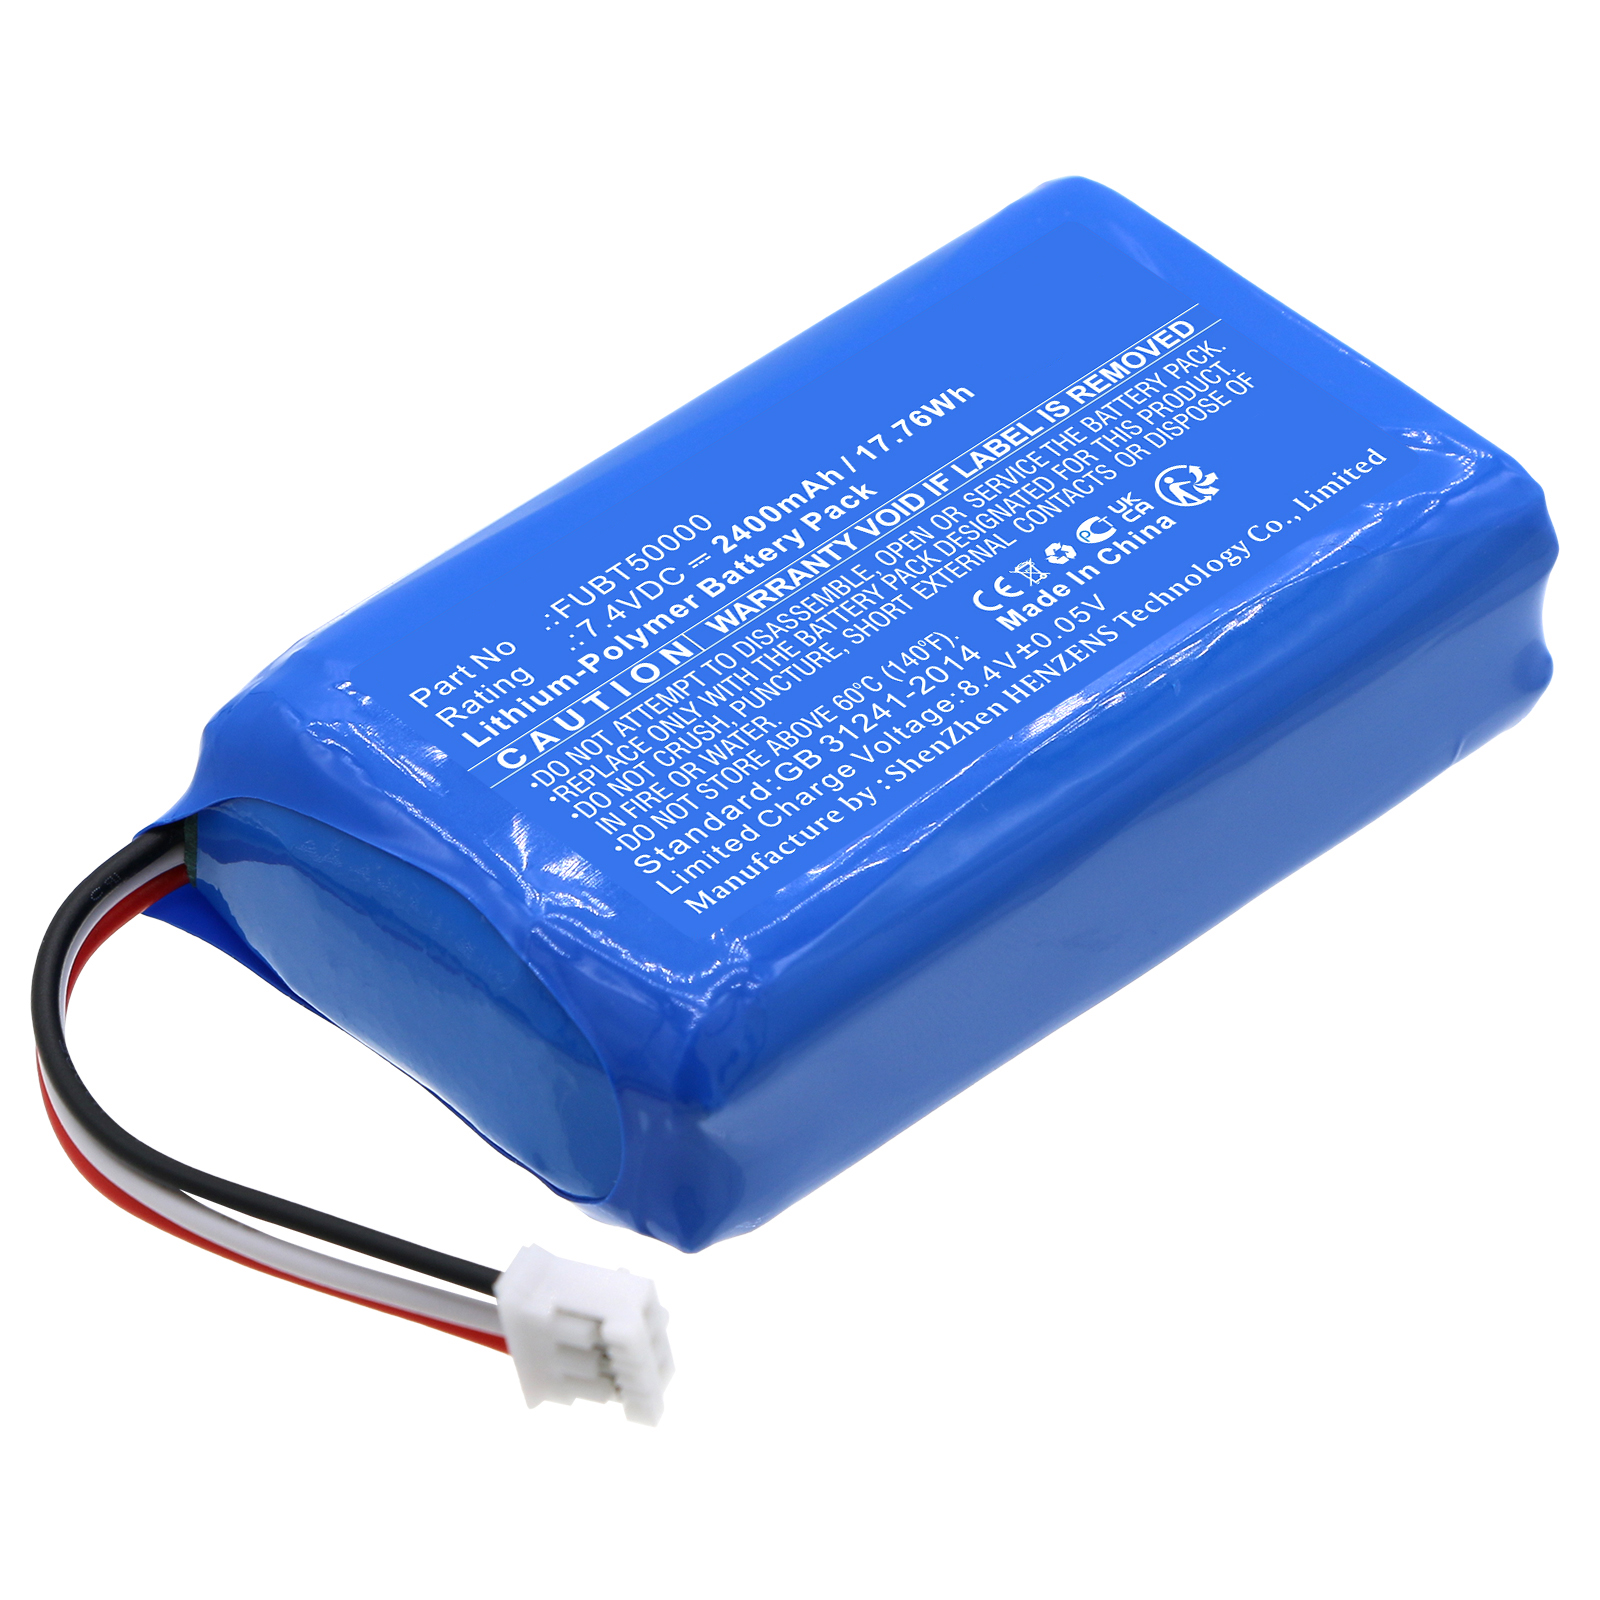 Synergy Digital Alarm System Battery, Compatible with ABUS FUBT50000 Alarm System Battery (Li-Pol, 7.4V, 2400mAh)